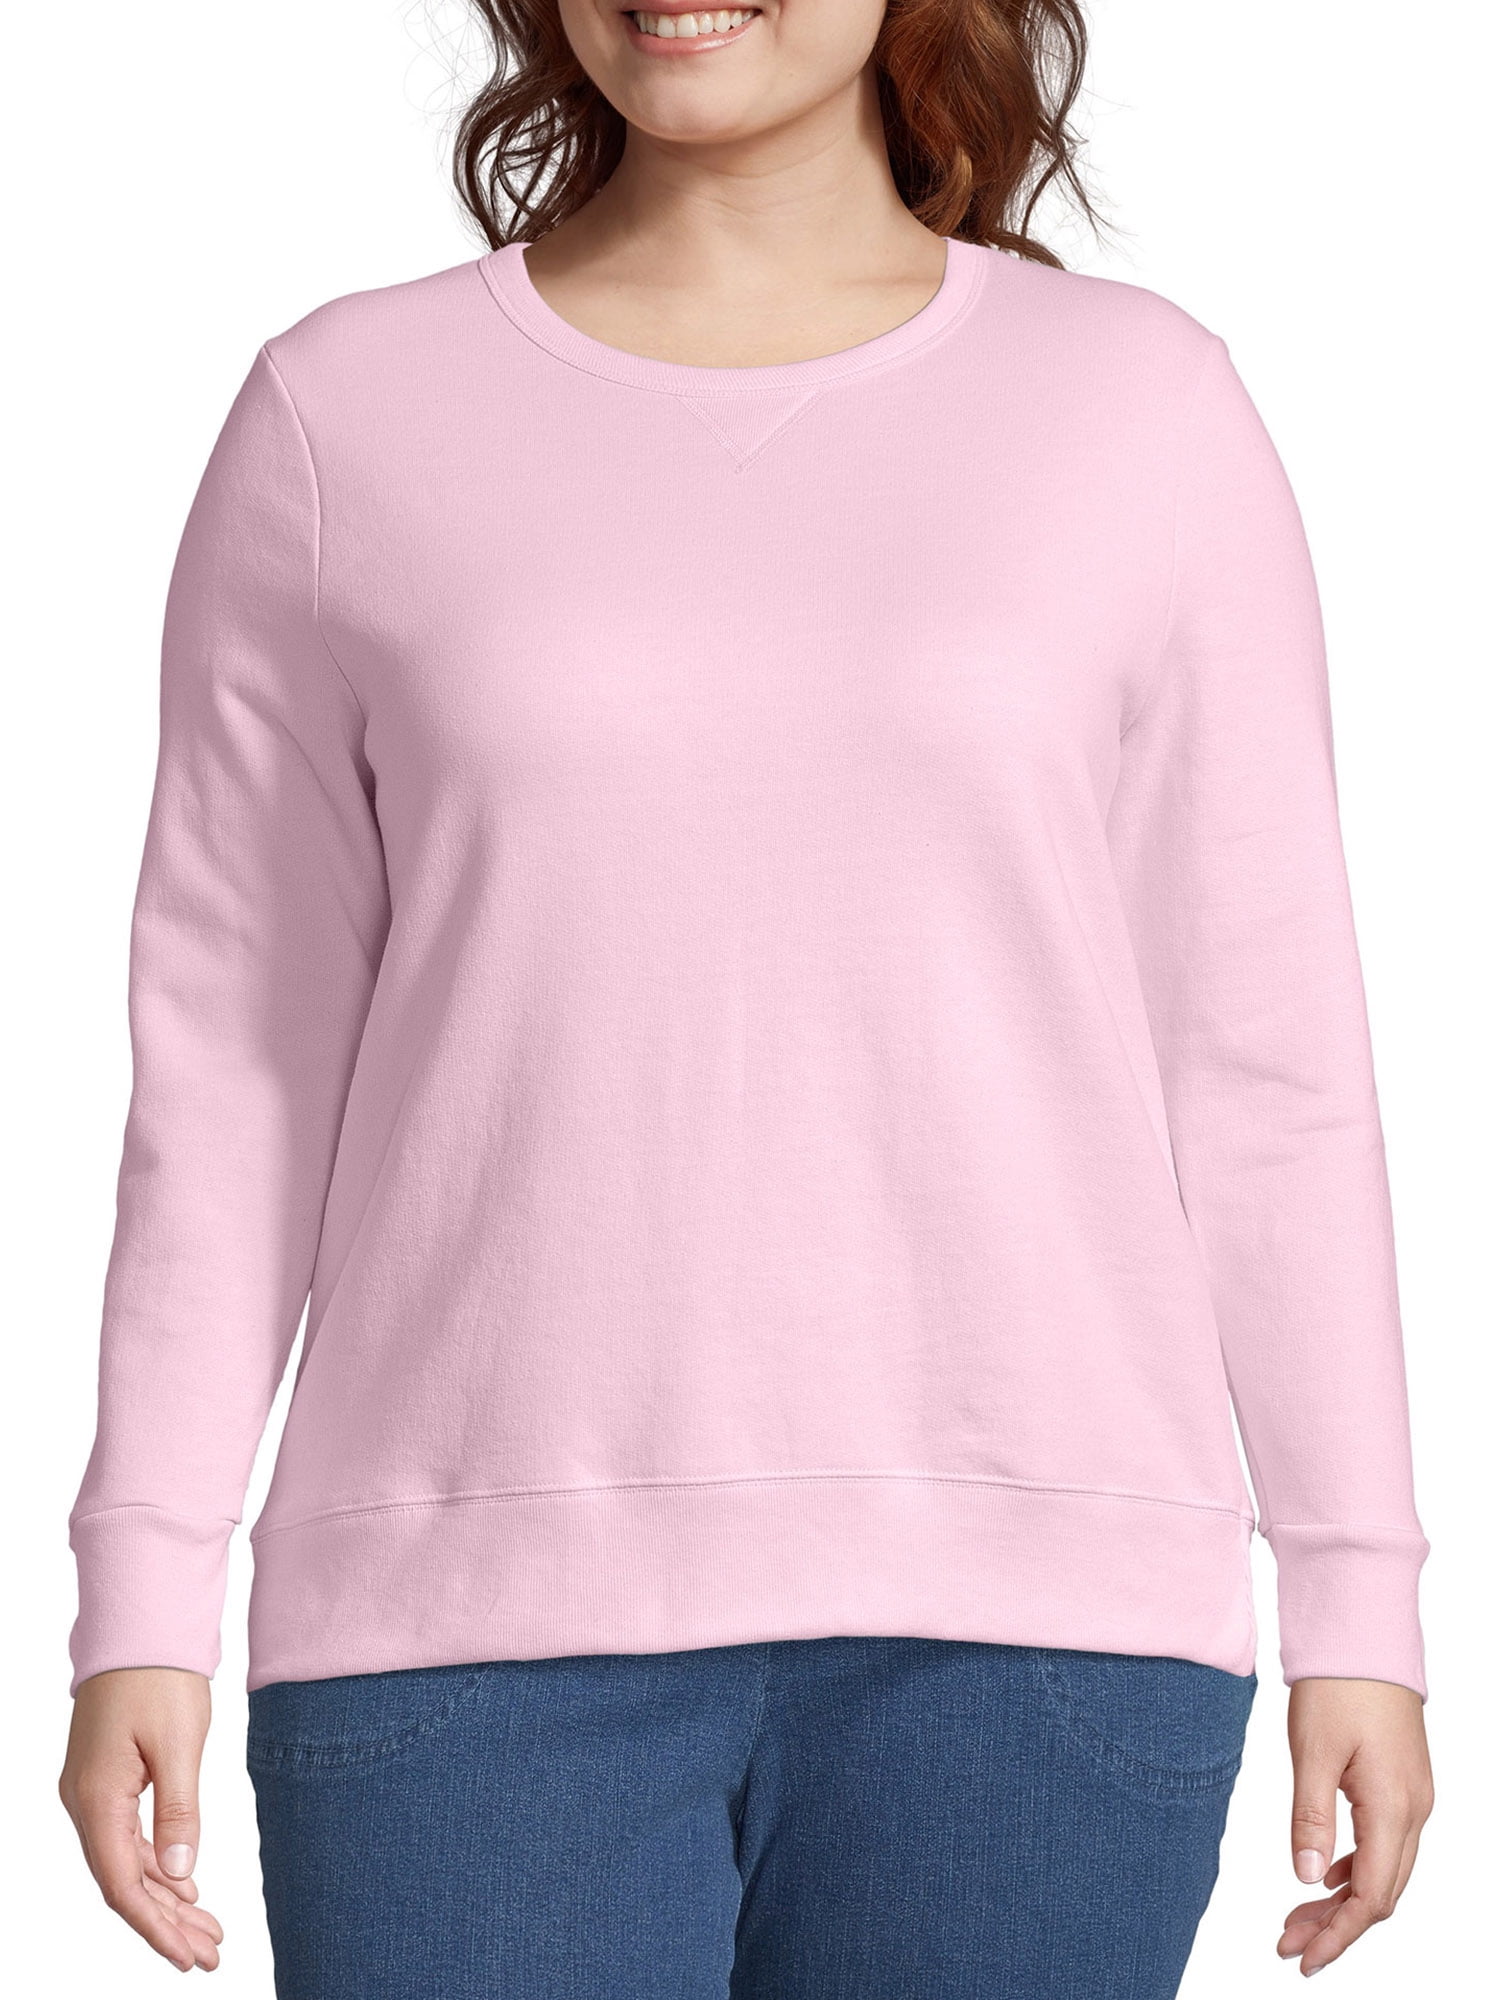 HUMMHUANJ Hoodies Neck Sweatshirt Long Sleeve Hot Pink Shirts Y2K Sweater  Women Sweatshirtes Under 10 Dollars Plus Size Sweater Casual Blazer for  Women Navy Blue Sweatshirt - Yahoo Shopping